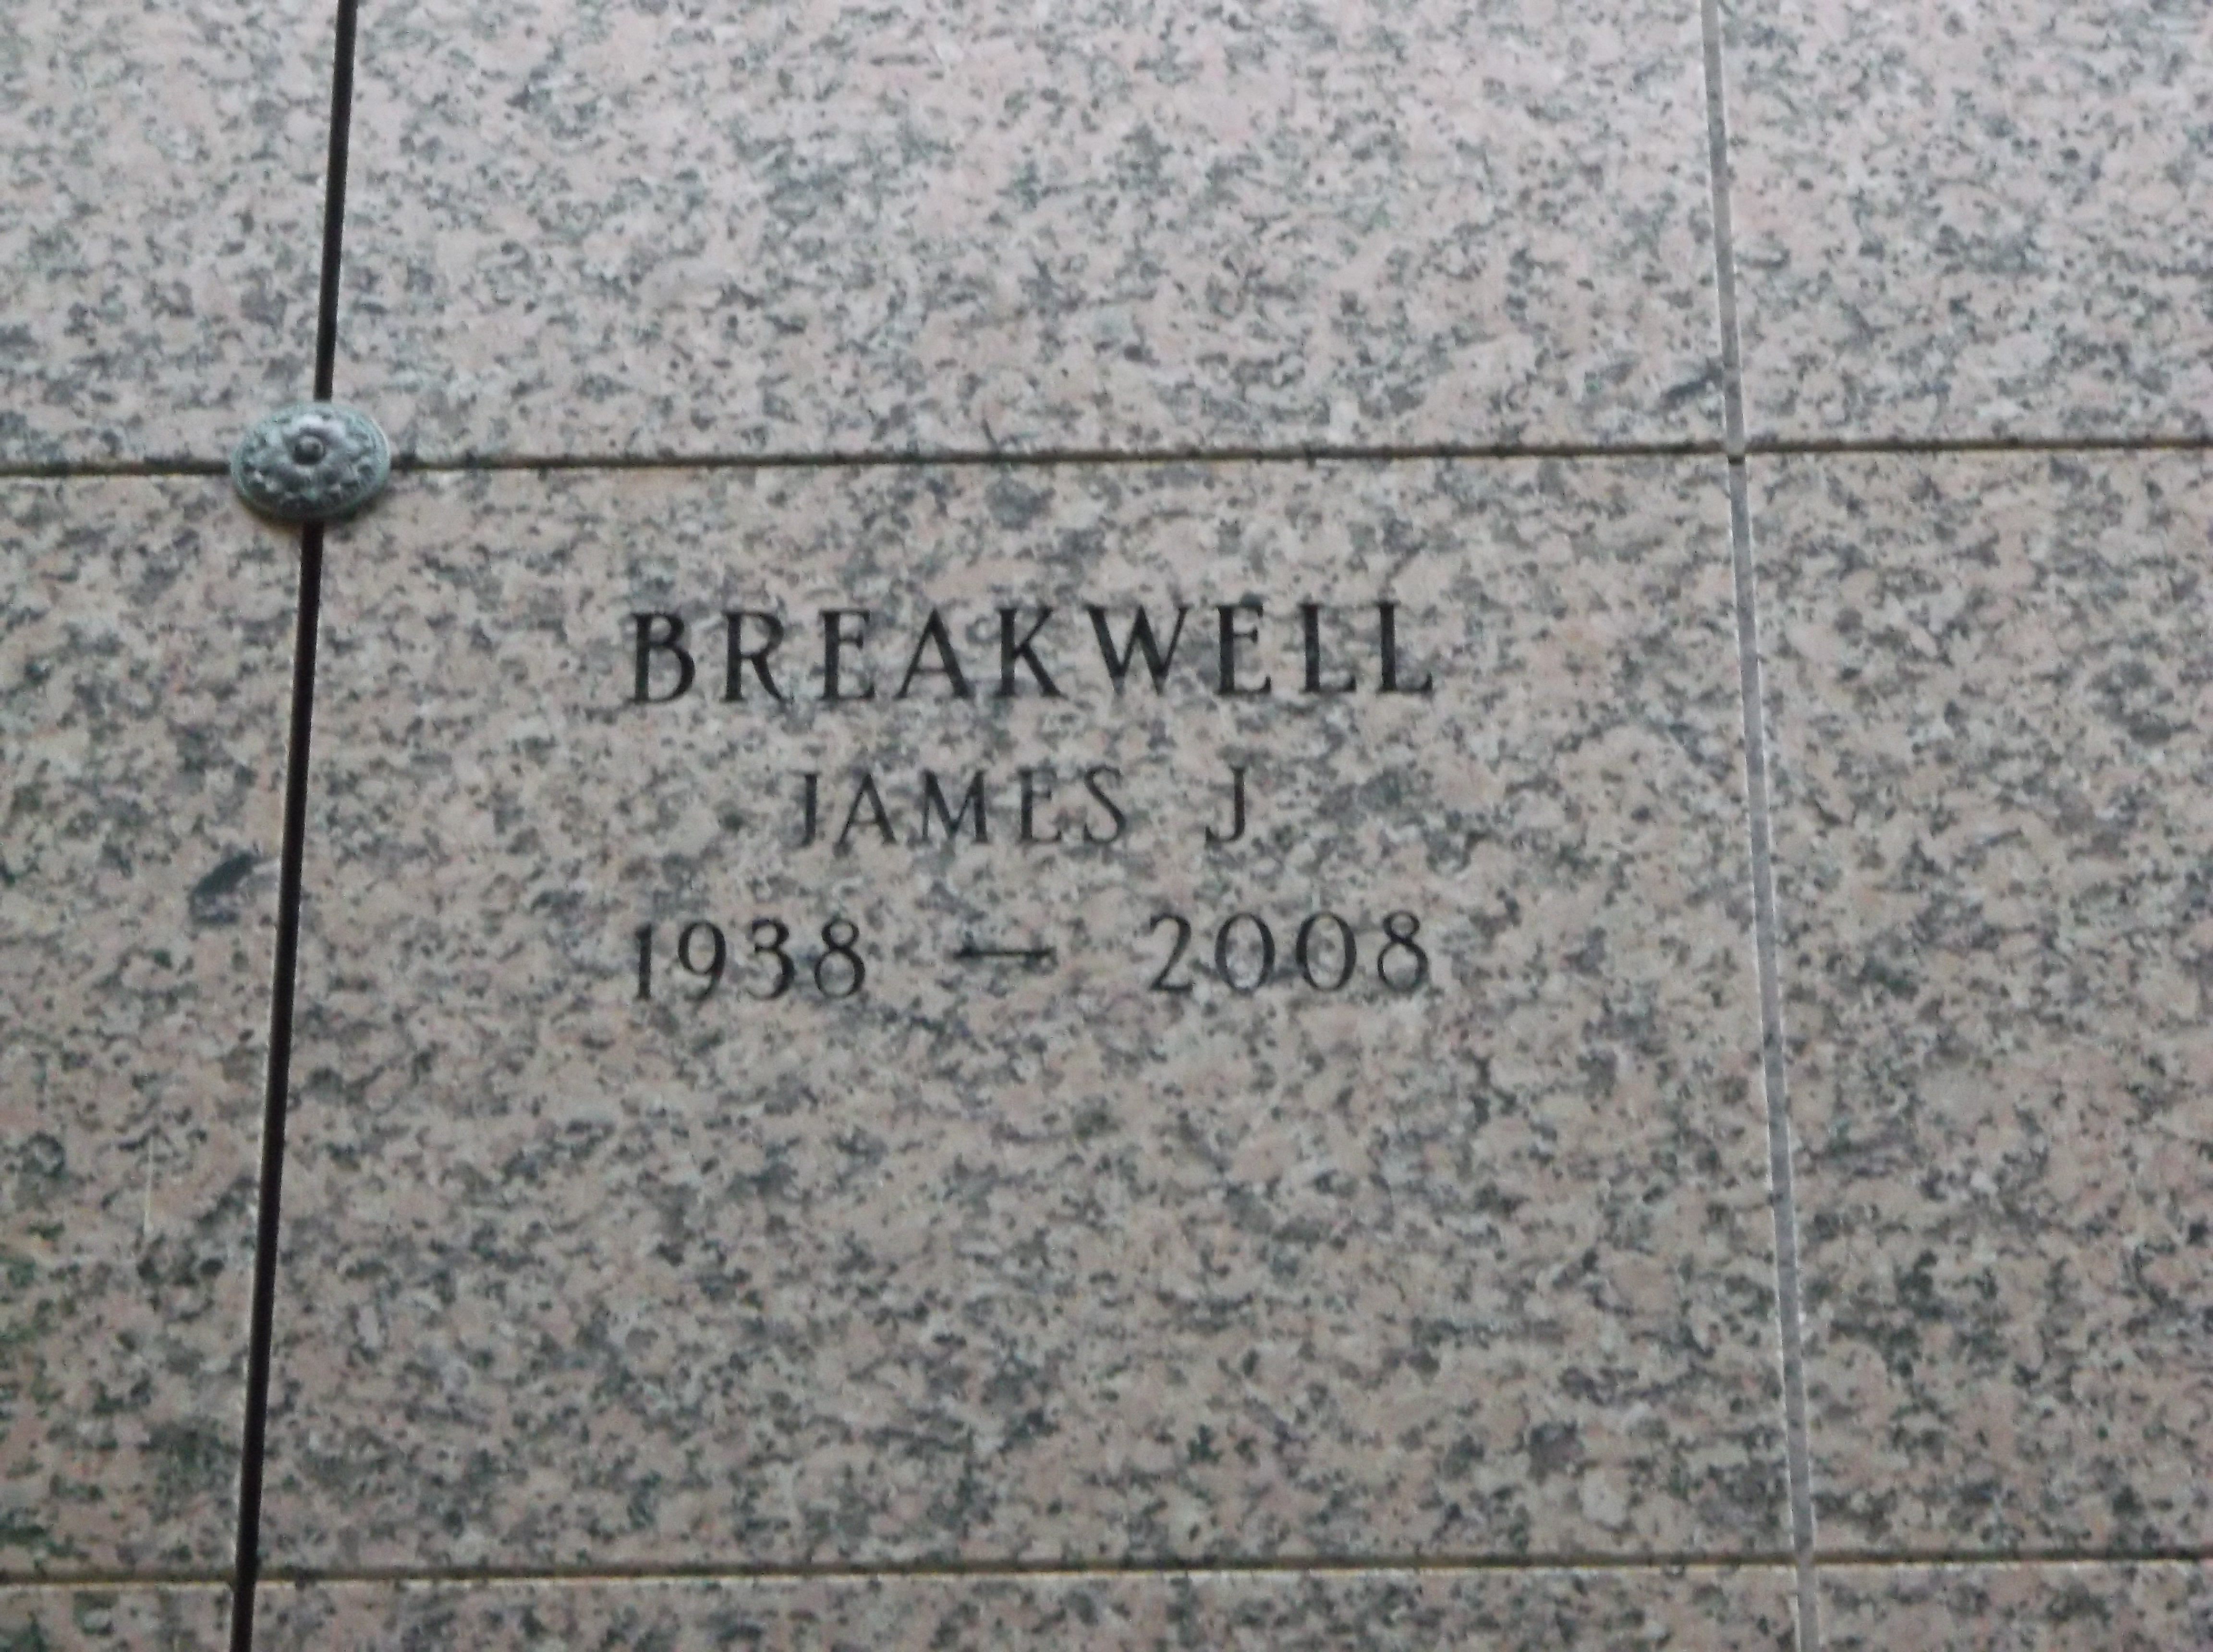 James J Breakwell